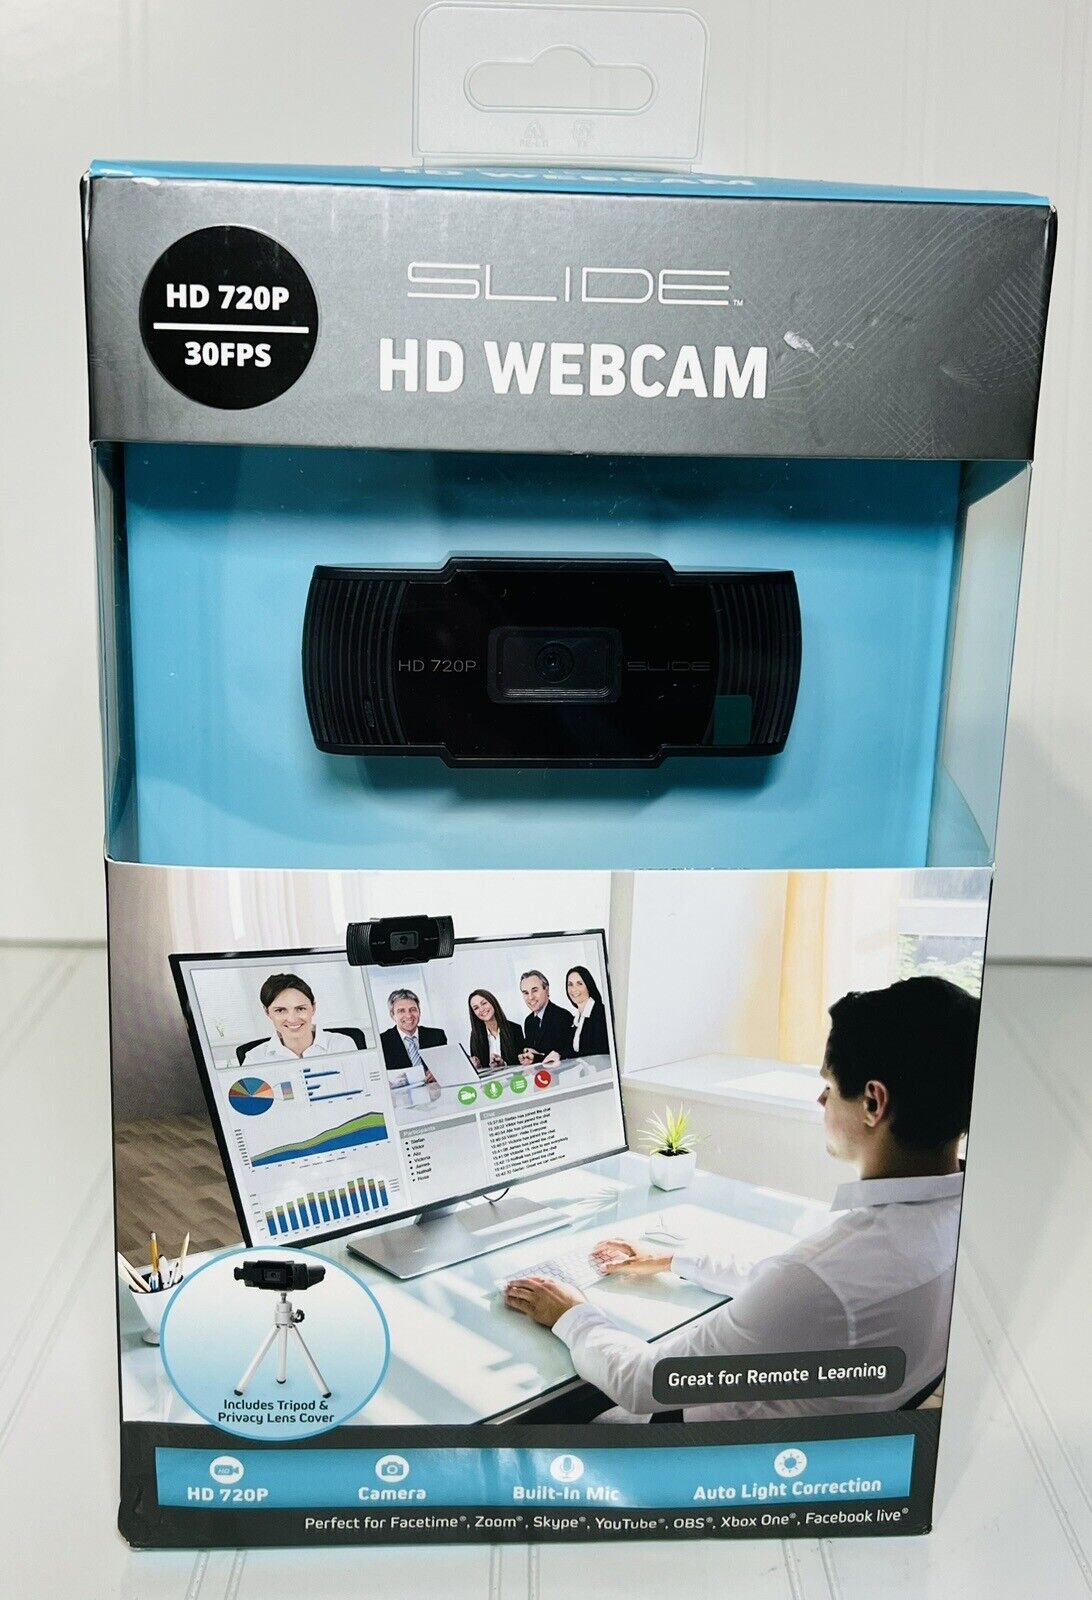 SLIDE WB12 USB 2.0 WebCam HD 720 30 FPS NIB Mic Gaming Remote Learning w Tripod